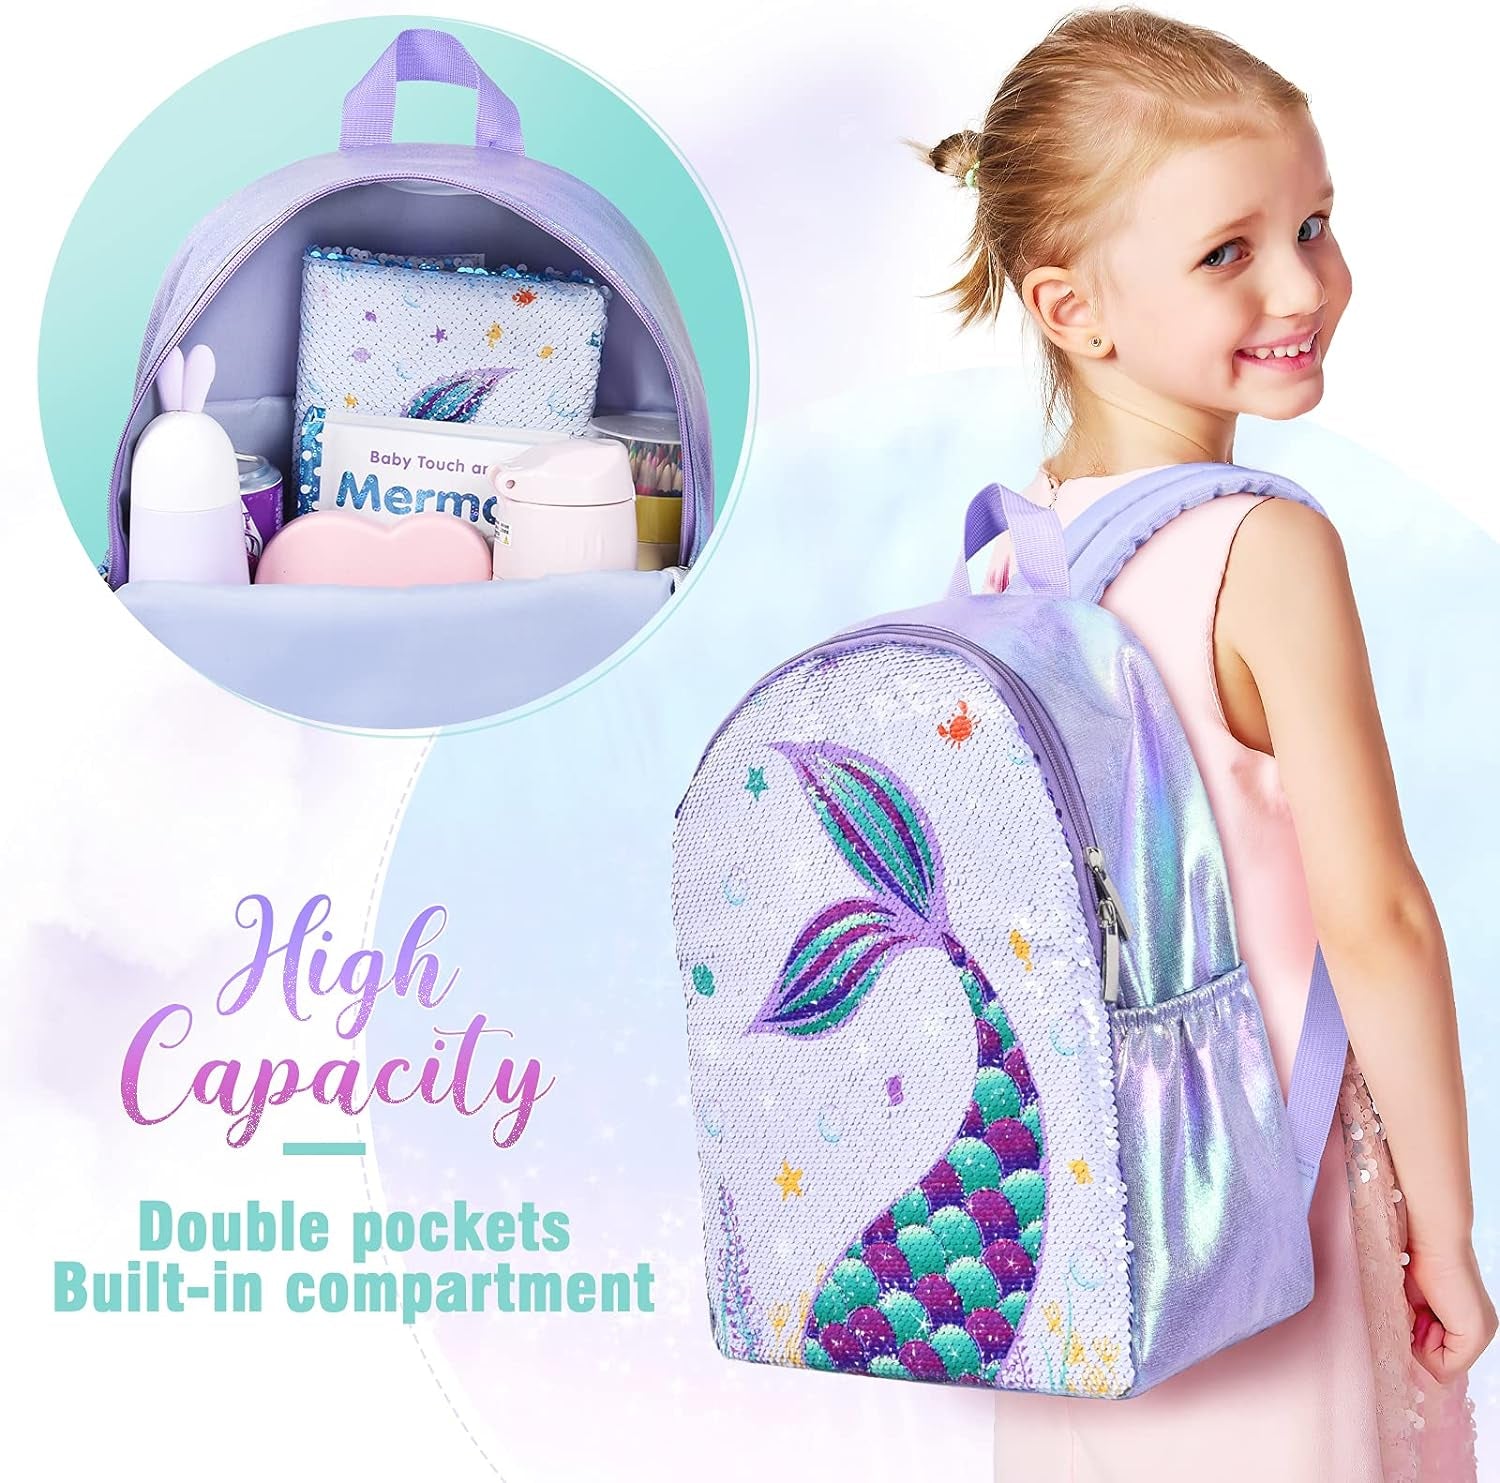 Sparkly Girls Mermaid Backpack - Sequins School Backpack for Kids Girls Preschool Kindergarten Elementary 15” Lightweight Travel Casual Book Bag Schoolbag